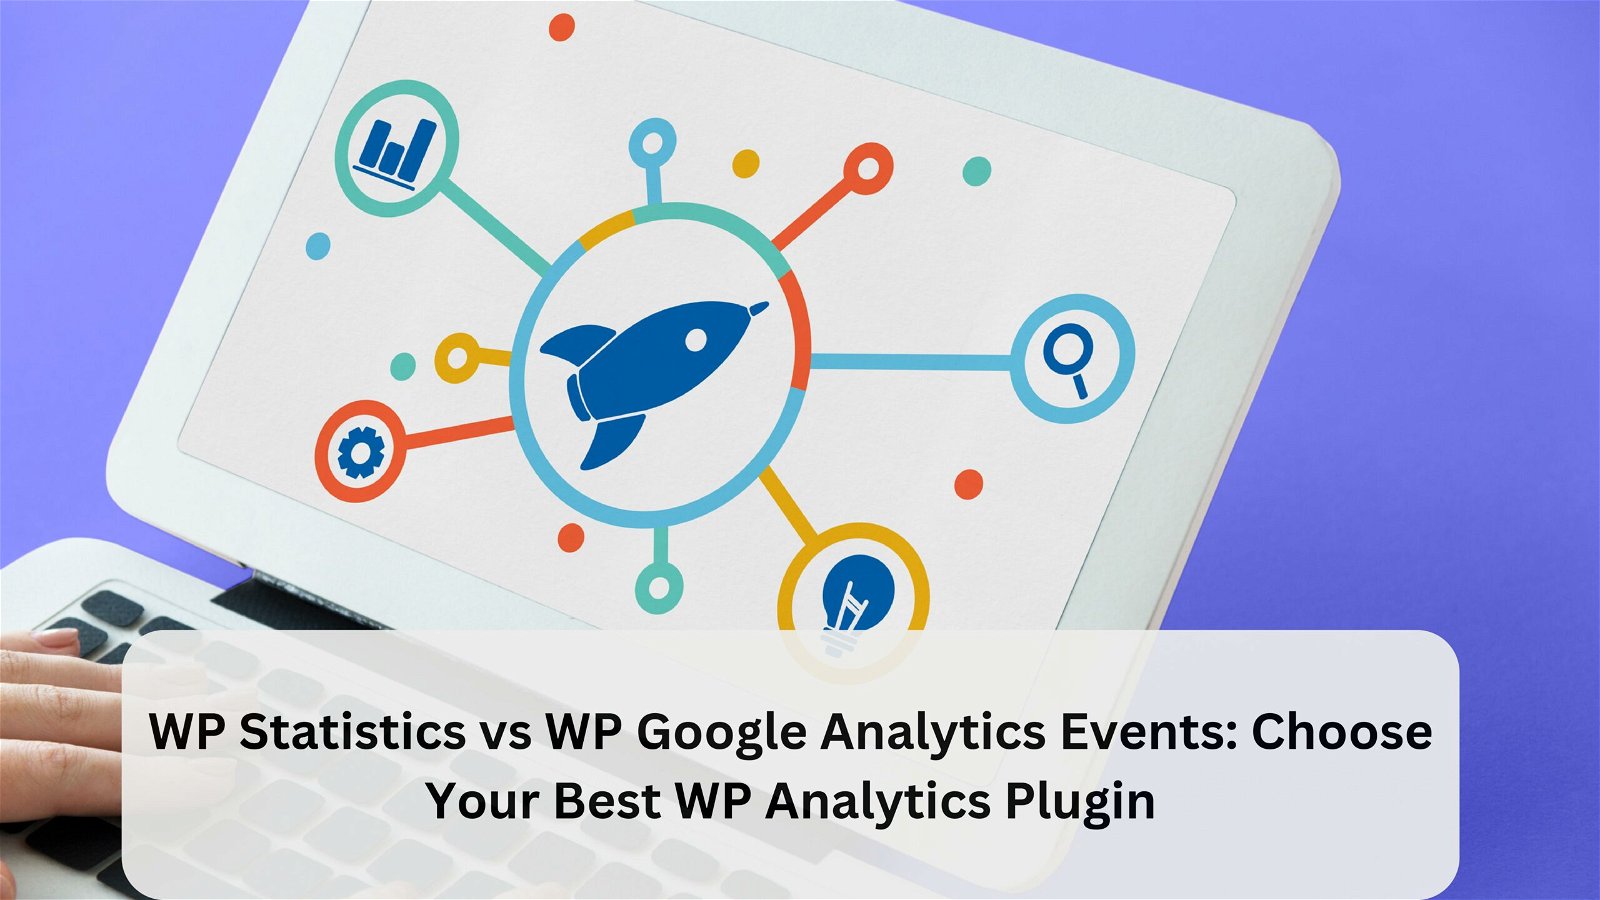 WP Statistics vs WP Google Analytics Events